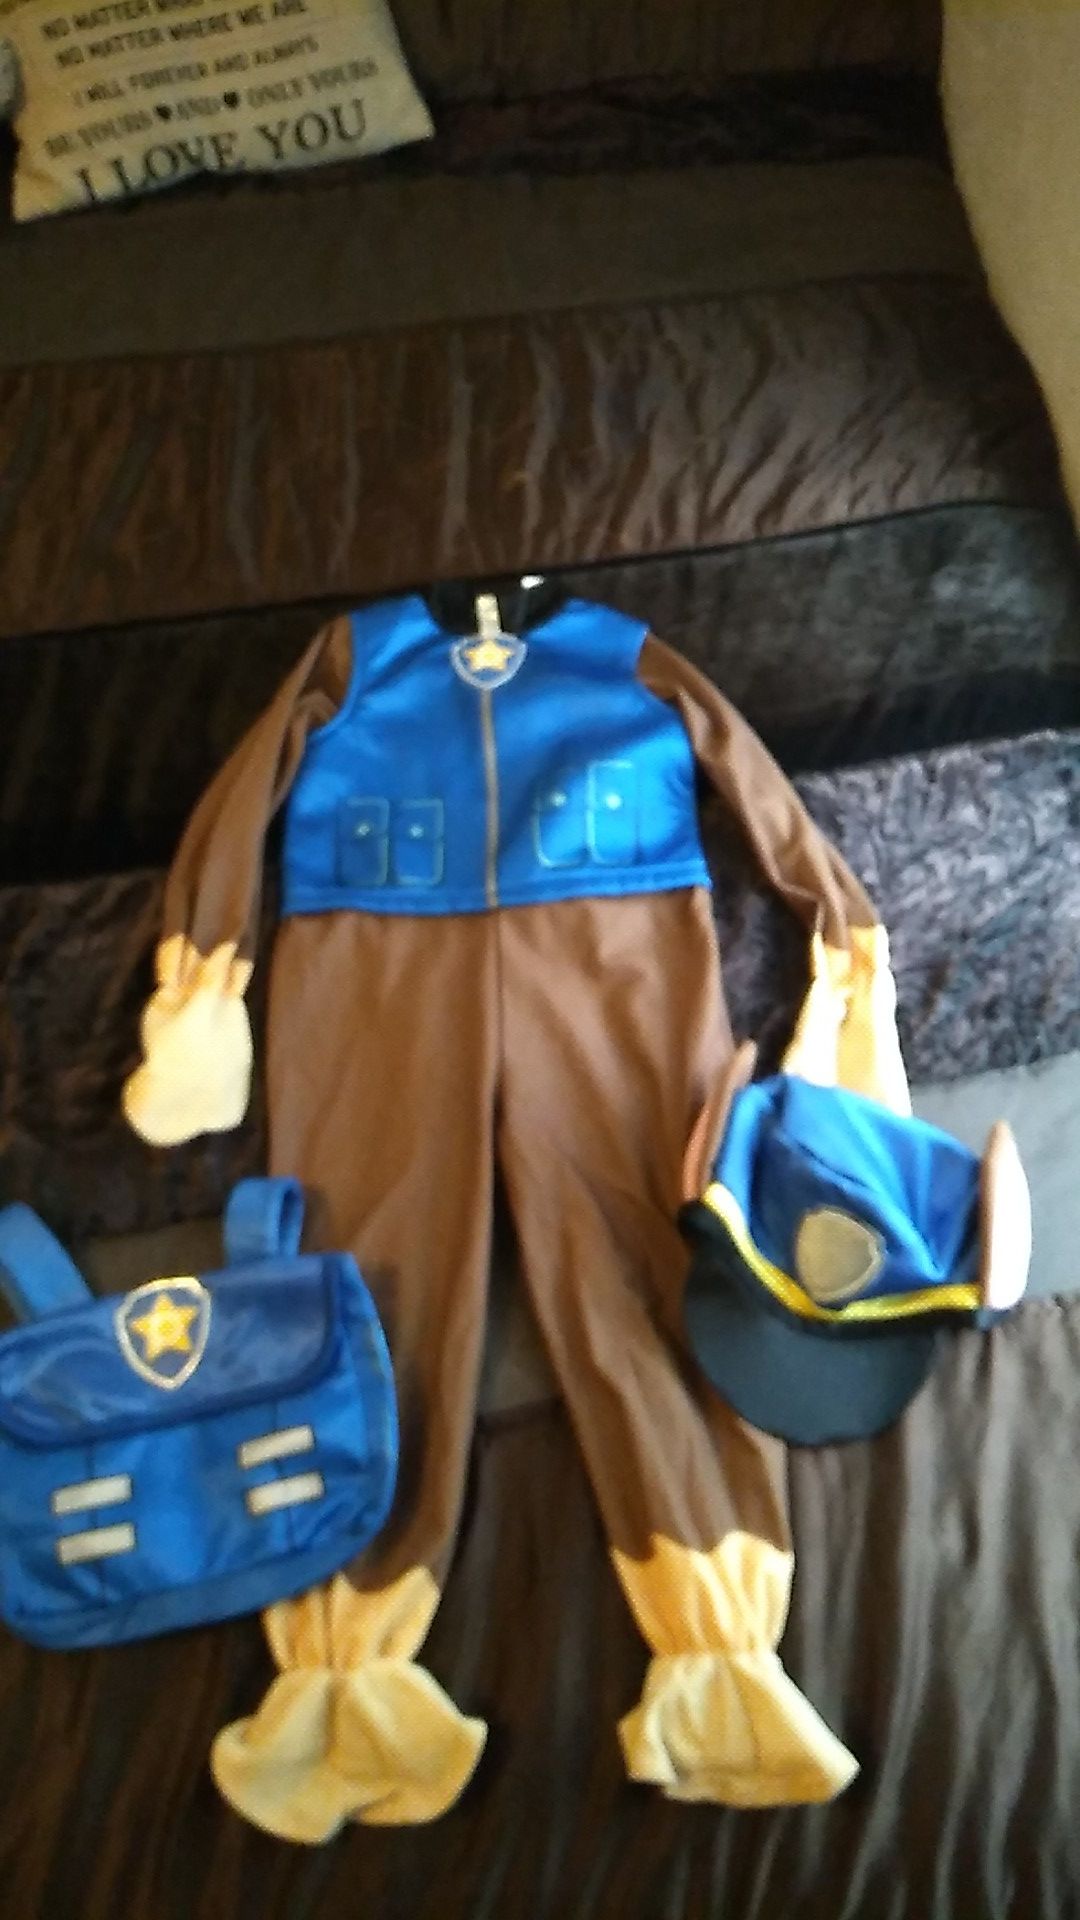 Paw patrol chase costume